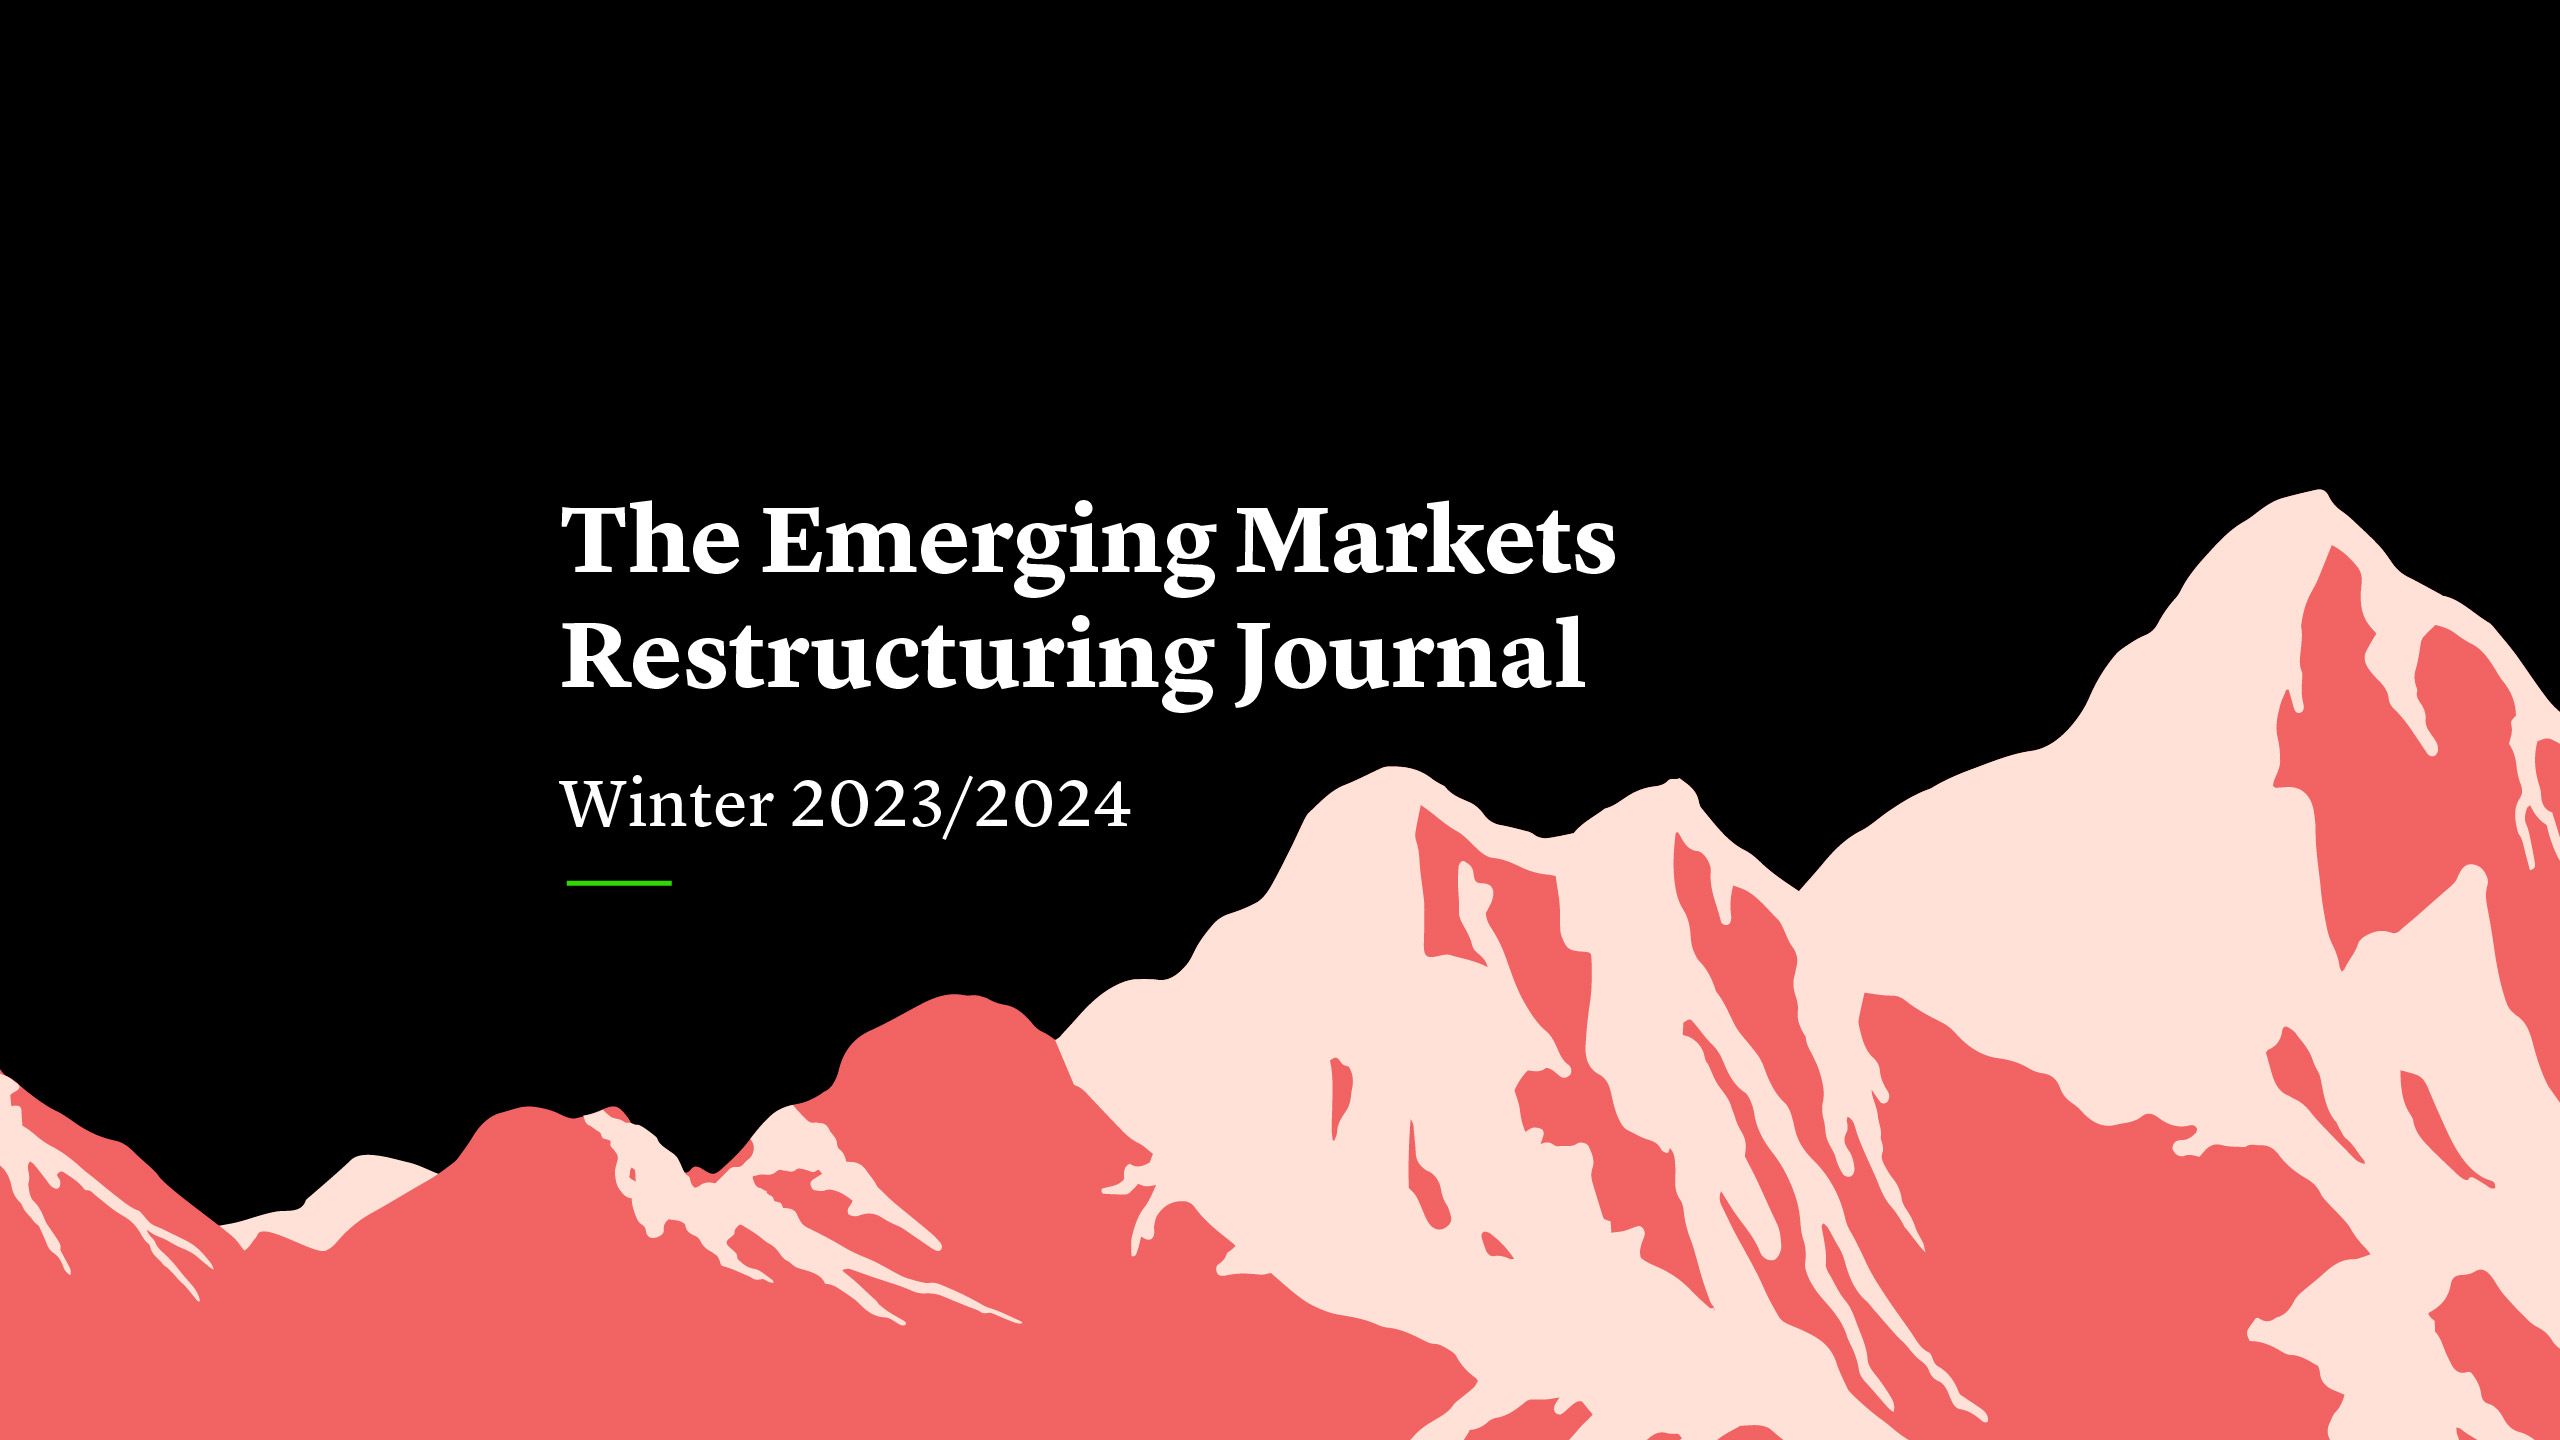 The Emerging Markets Restructuring Journal Winter 2023/2024